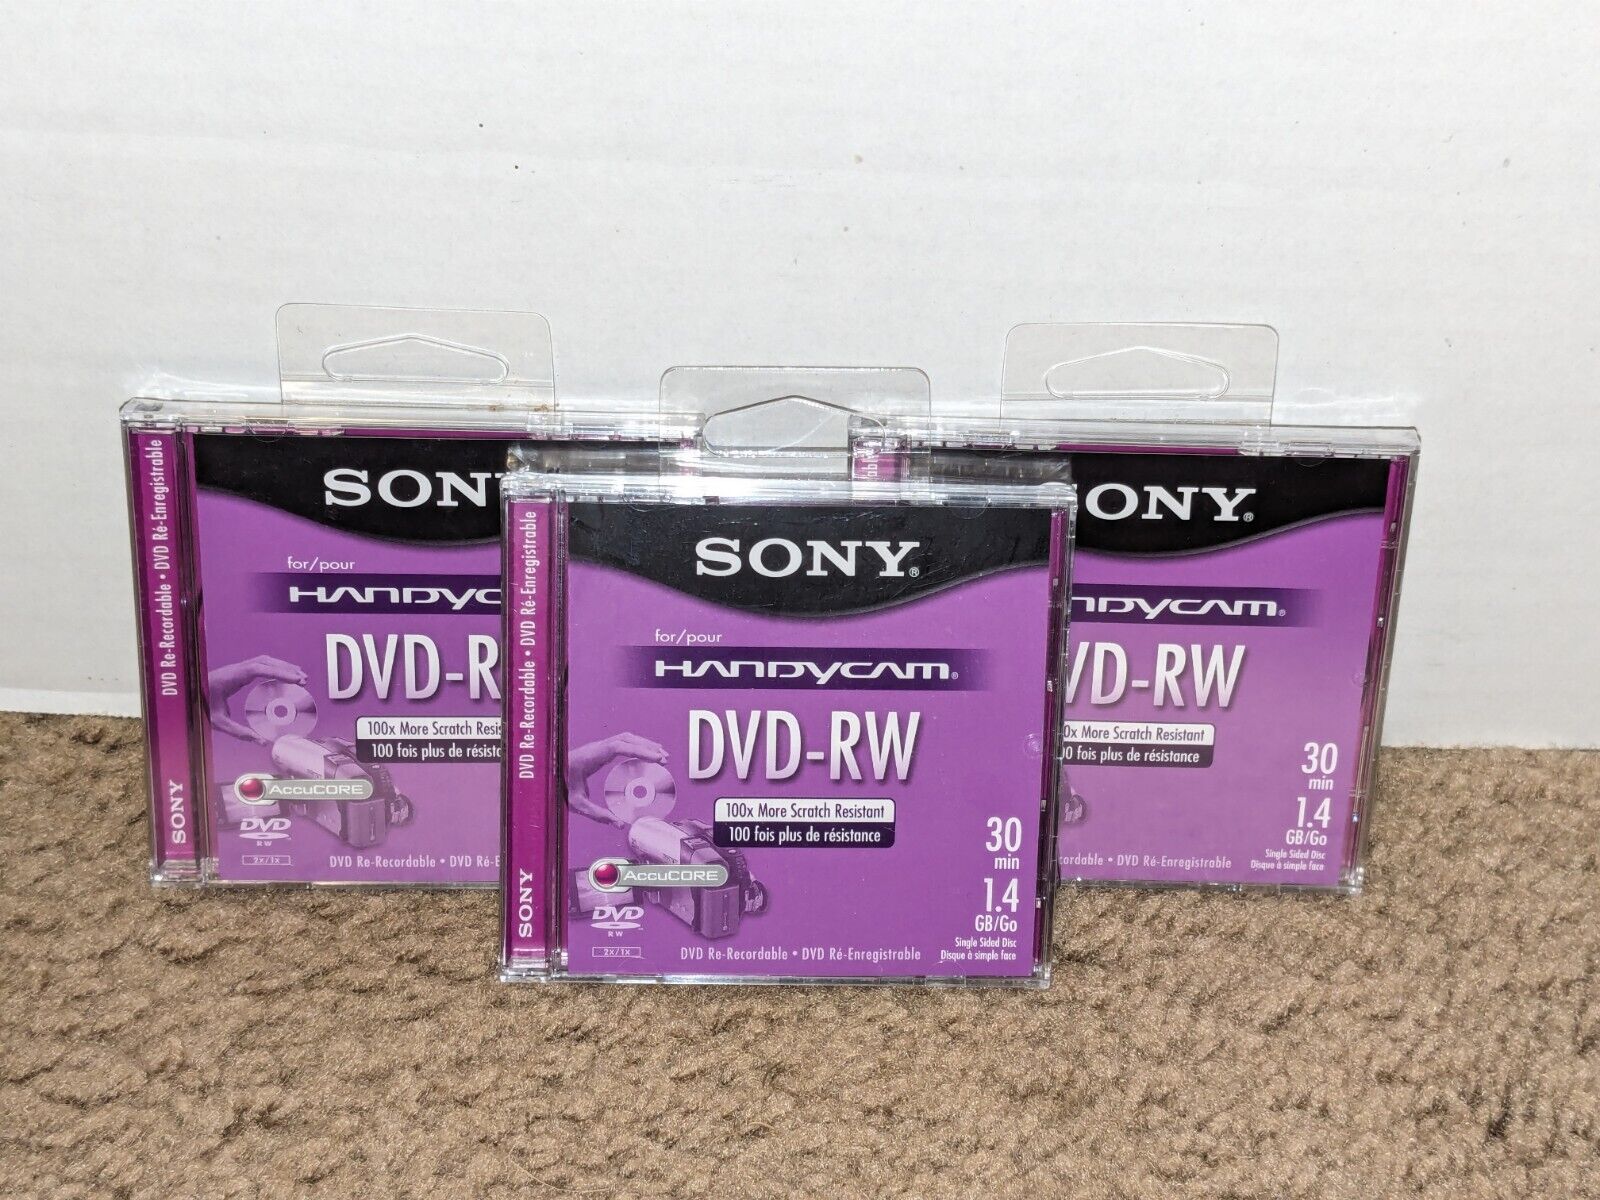 Sony Handycam DVD-RW 3-Pack 30 Min 1.4GB New SEALED